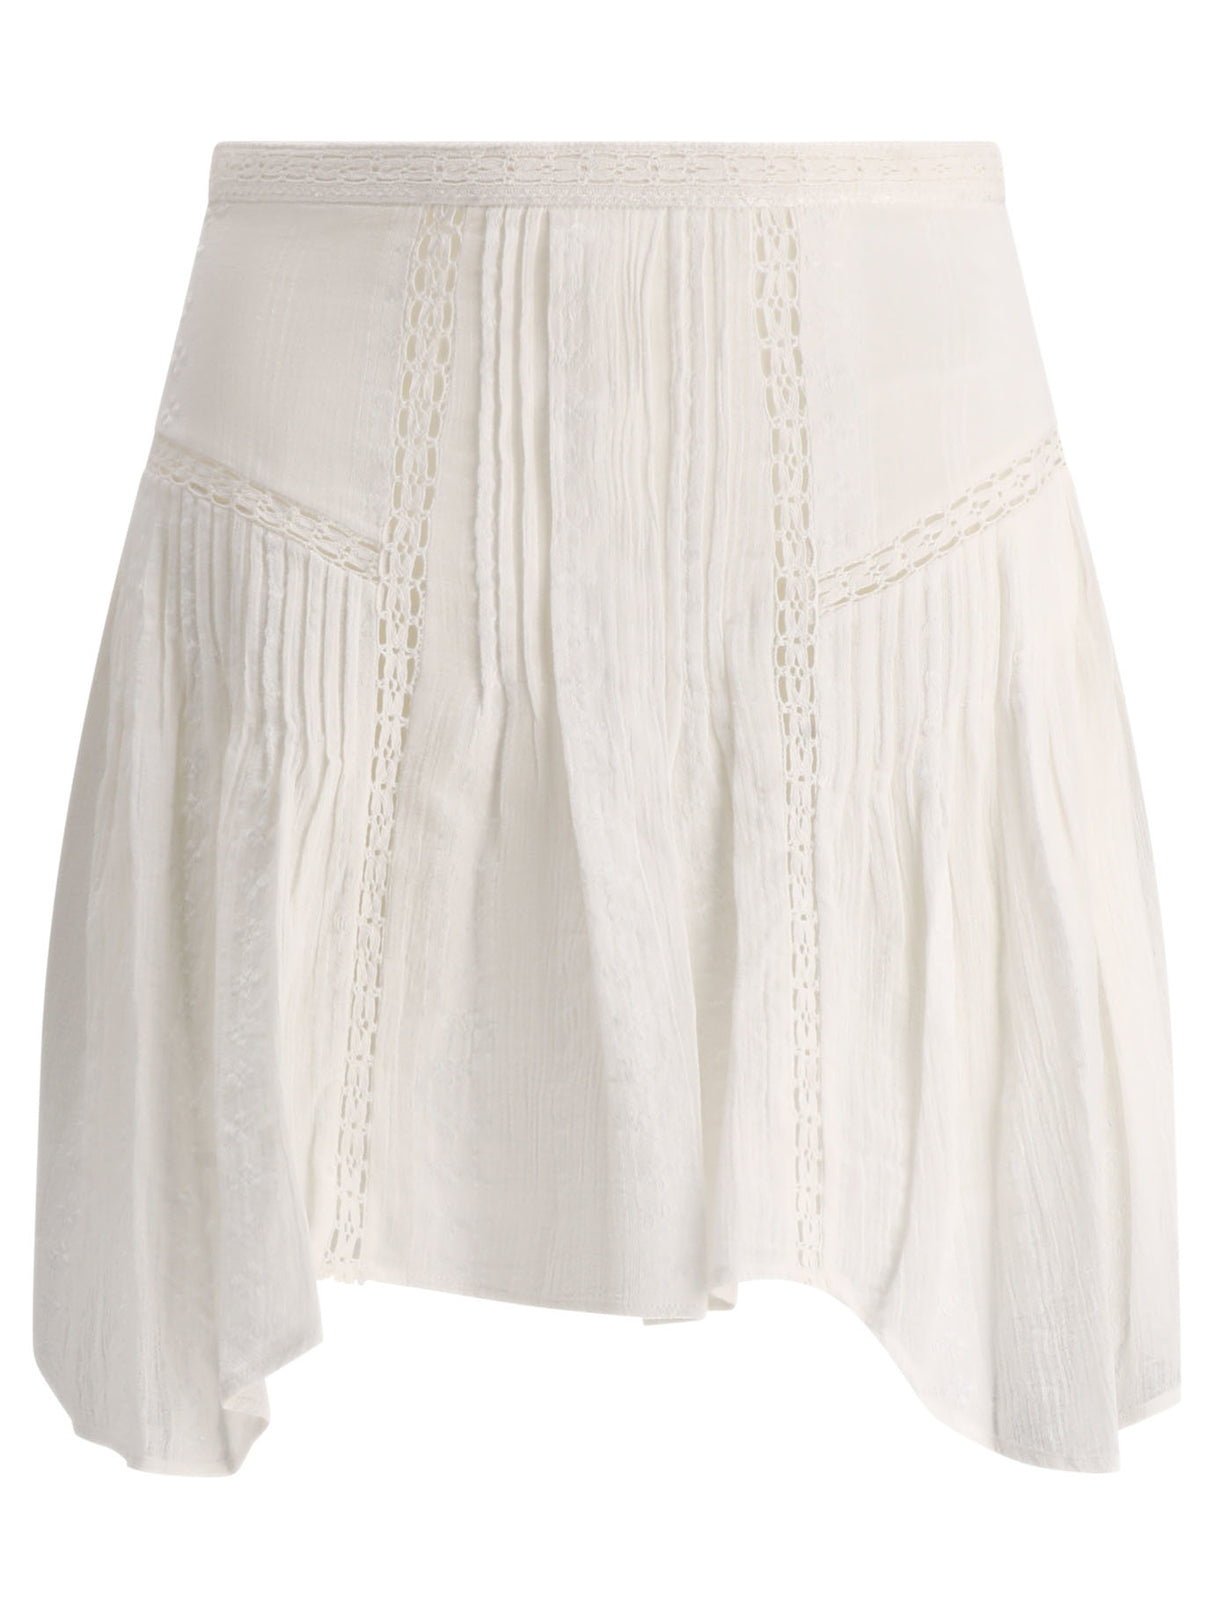 ISABEL MARANT Asymmetric Skirt for Women in White - High Waist, Regular Fit, Zipper Closure